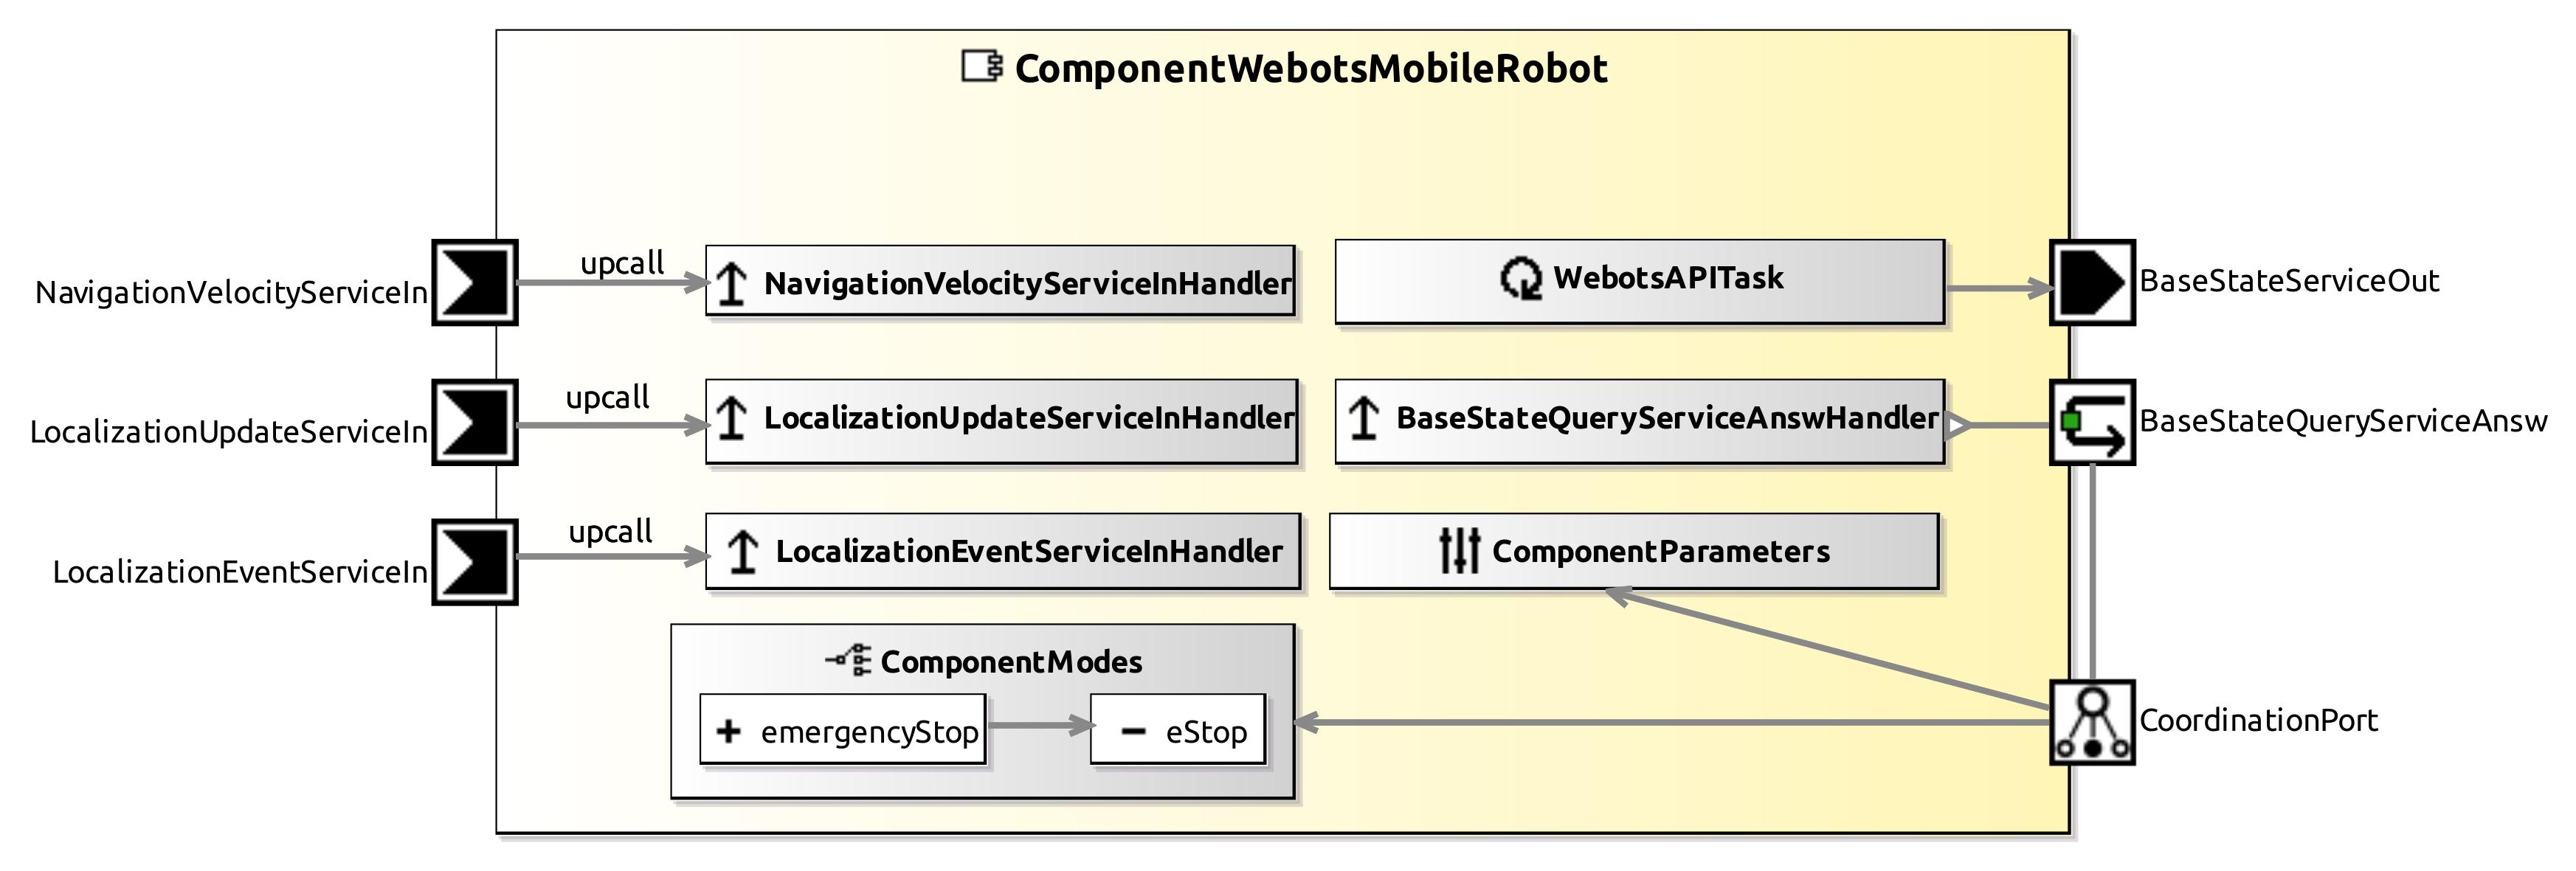 raw.githubusercontent.com_servicerobotics-ulm_componentrepository_master_componentwebotsmobilerobot_model_componentwebotsmobilerobotcomponentdefinition.jpg